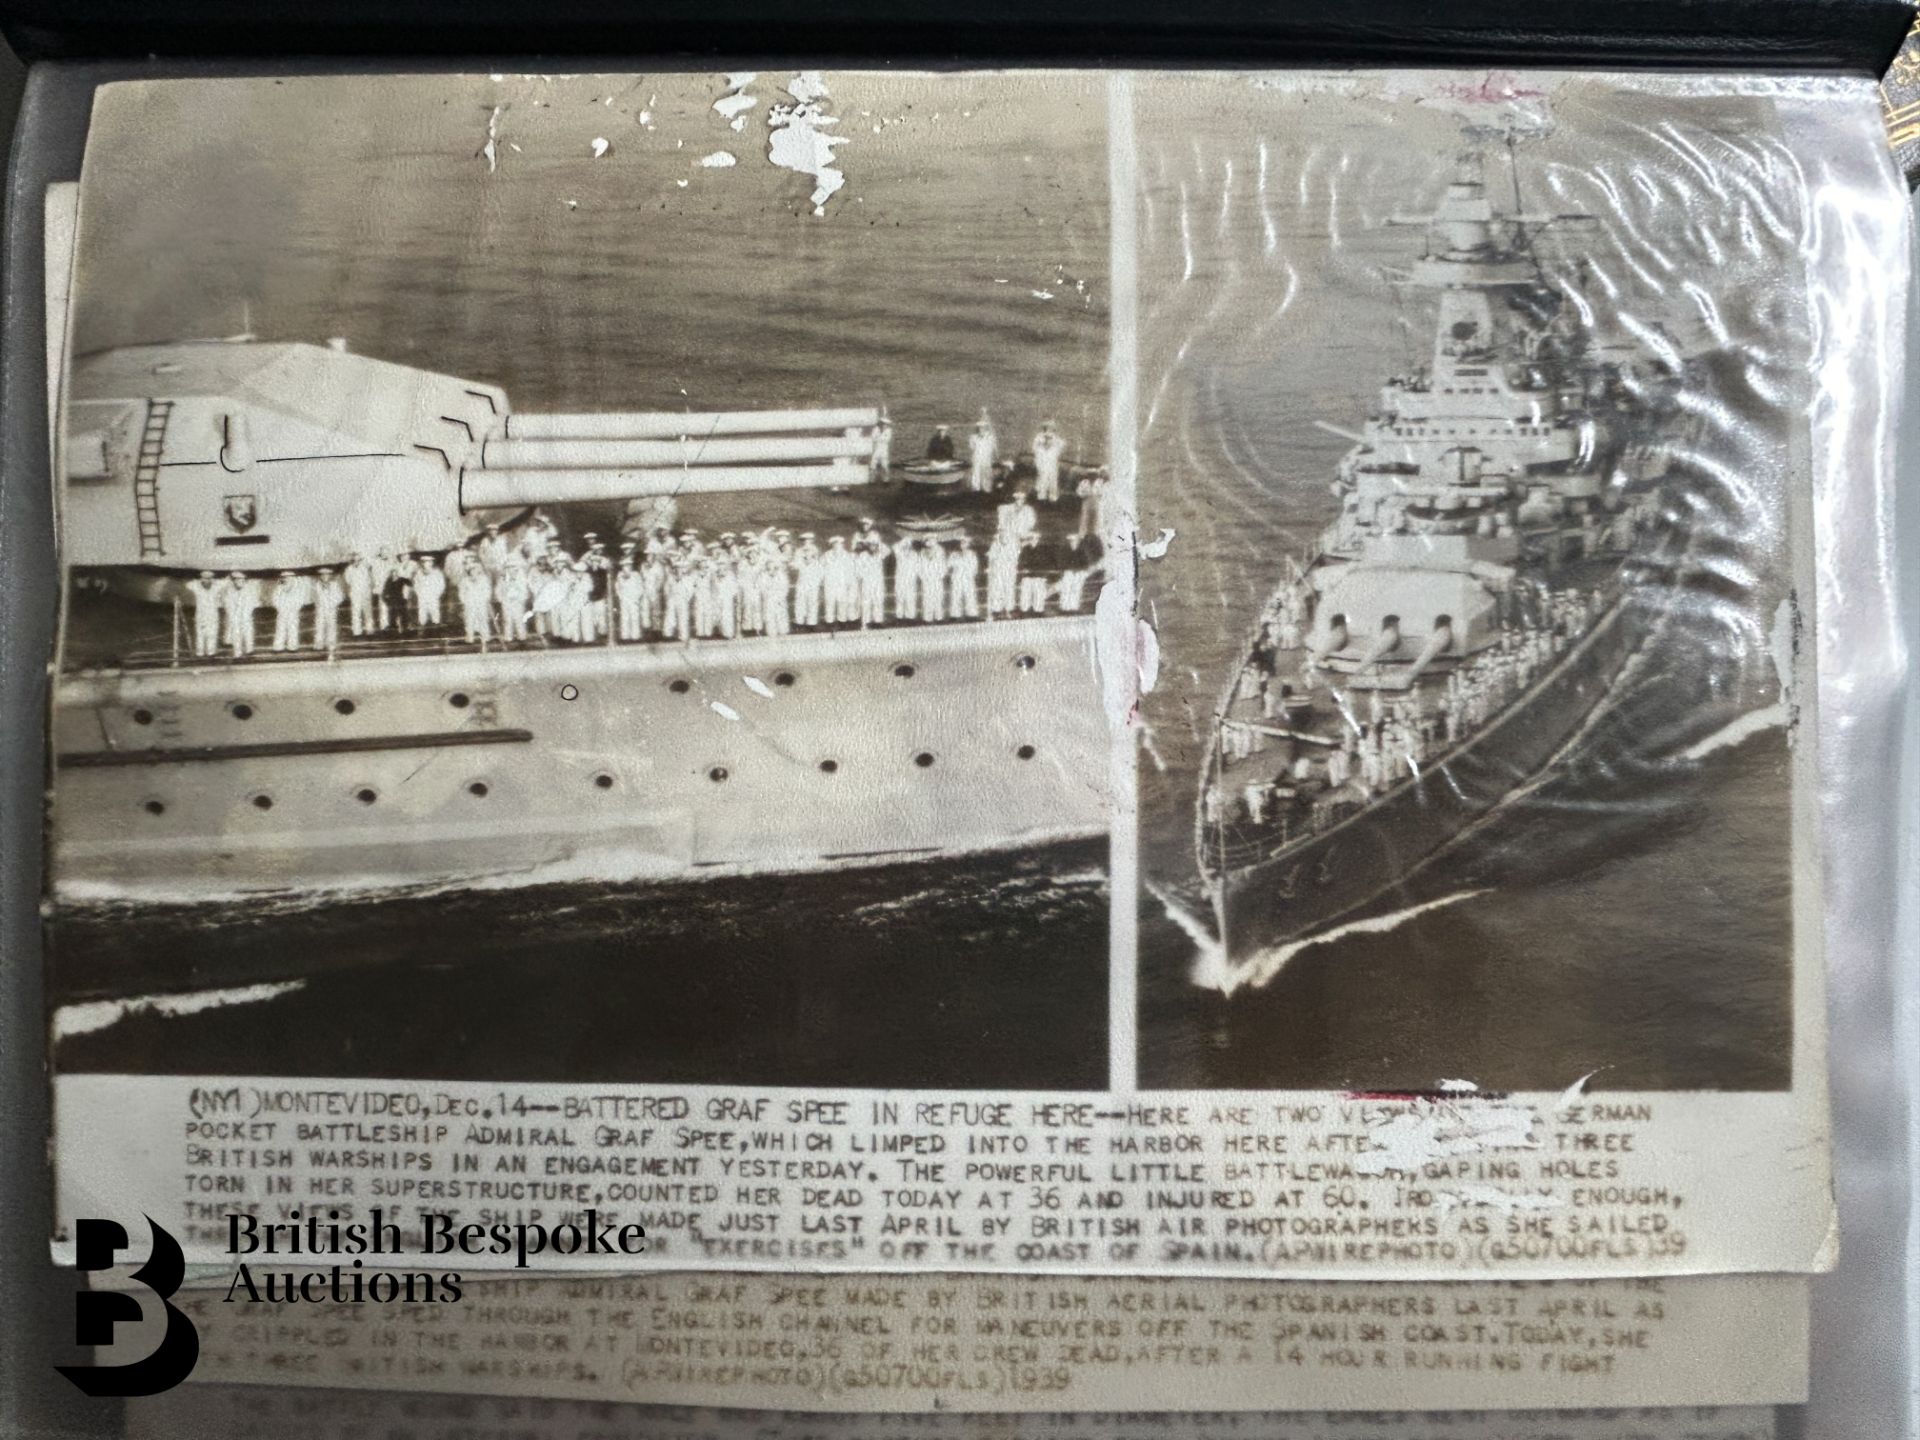 Graf Spee (Pocket Battleship) Interest, incl. Photographs, Documents, Miscellanea - Image 109 of 126